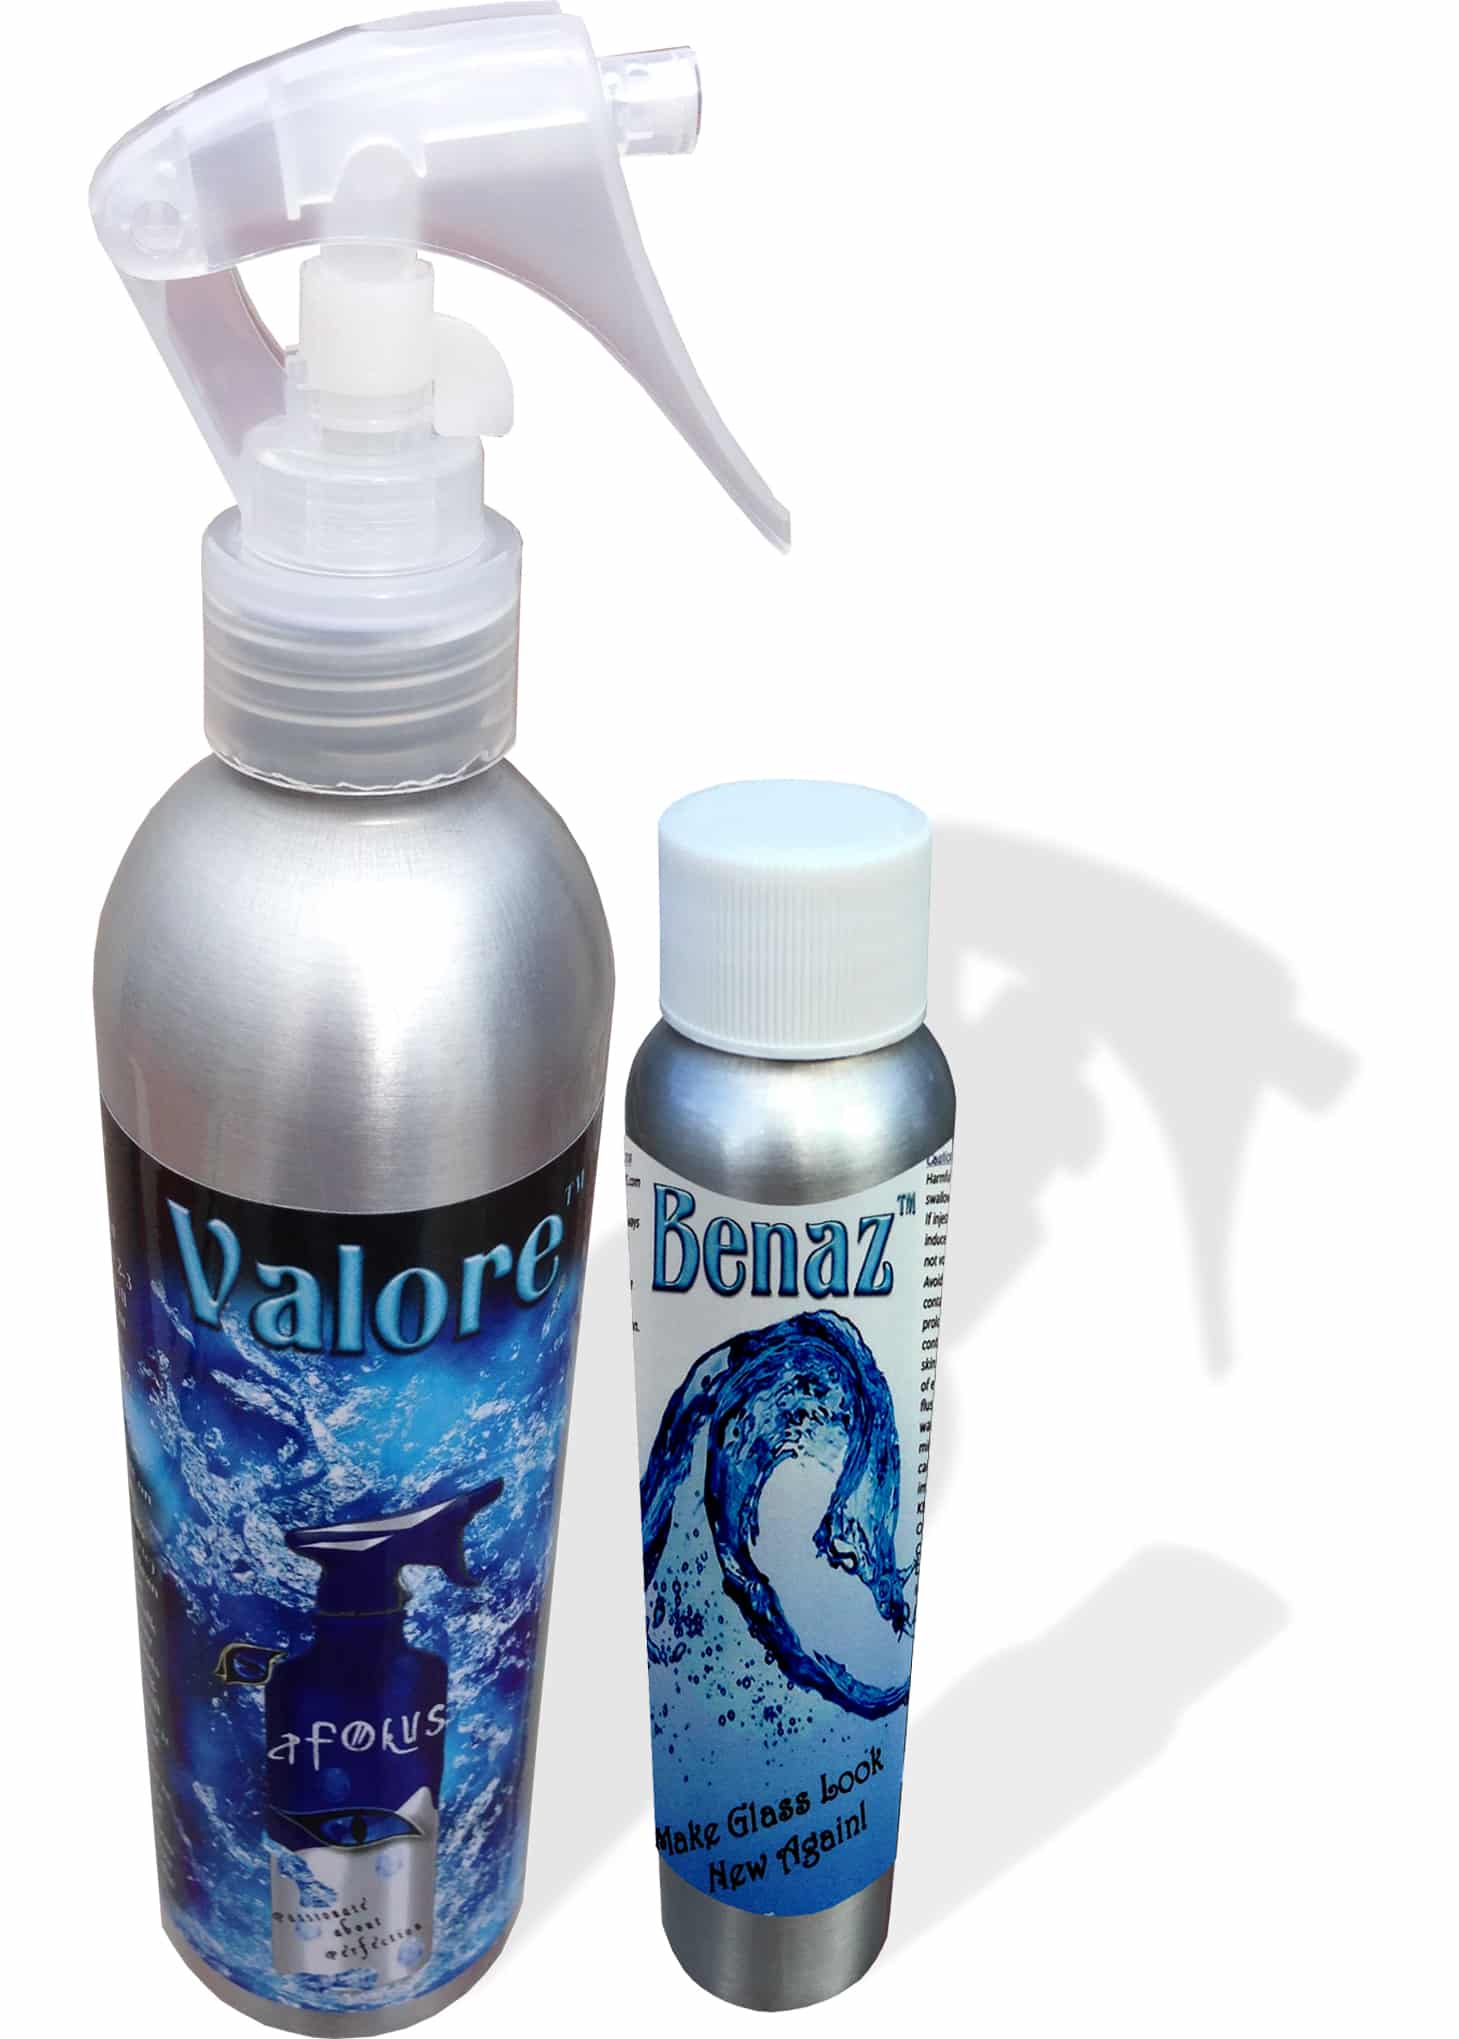 Valore-Benaz-Glass-Cleaner